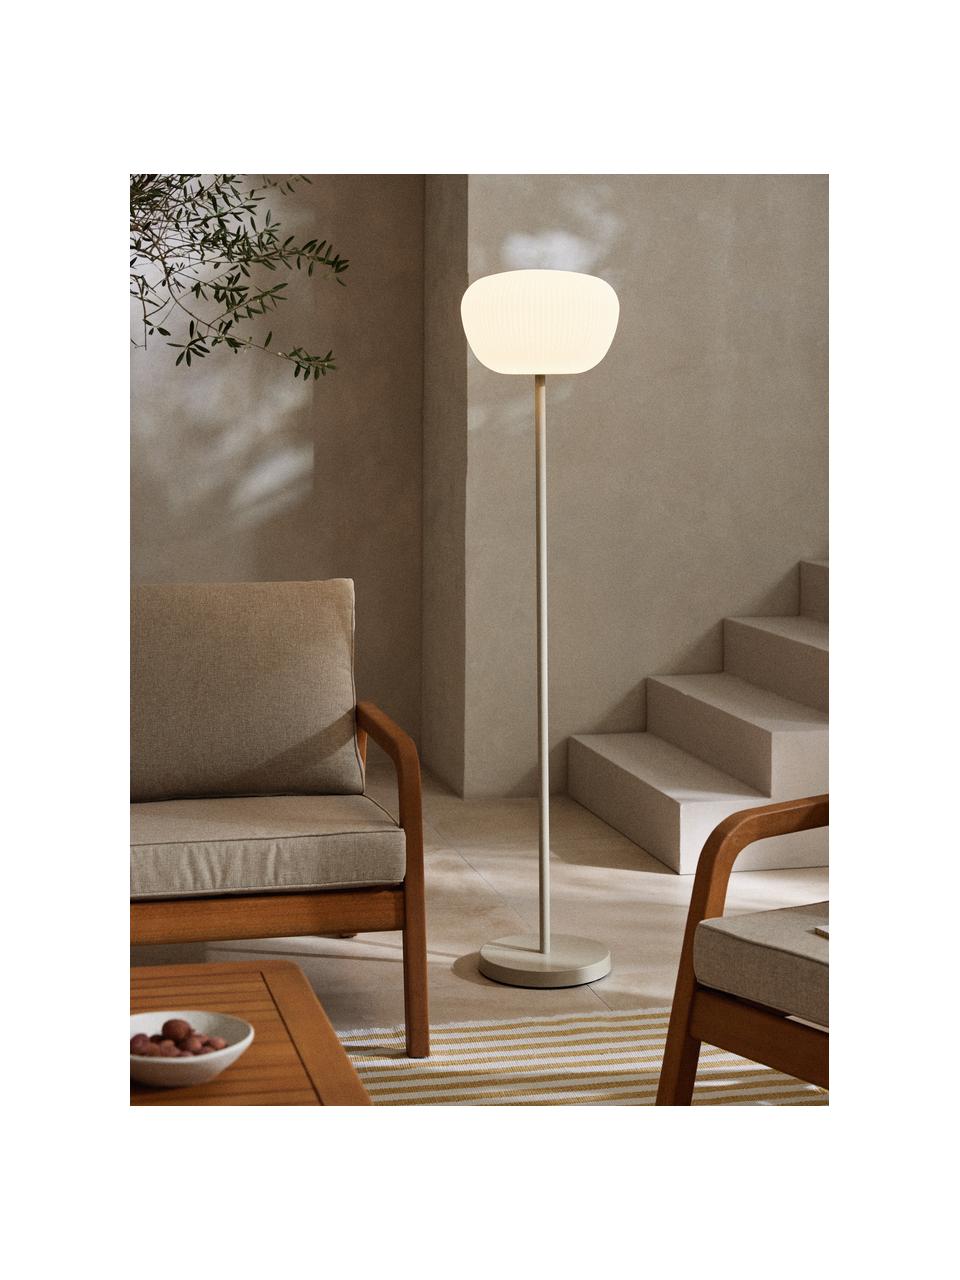 Mobiel outdoor vloerlamp Tara, dimbaar, Lampenkap: acrylglas, Wit, lichtbeige, H 151 cm